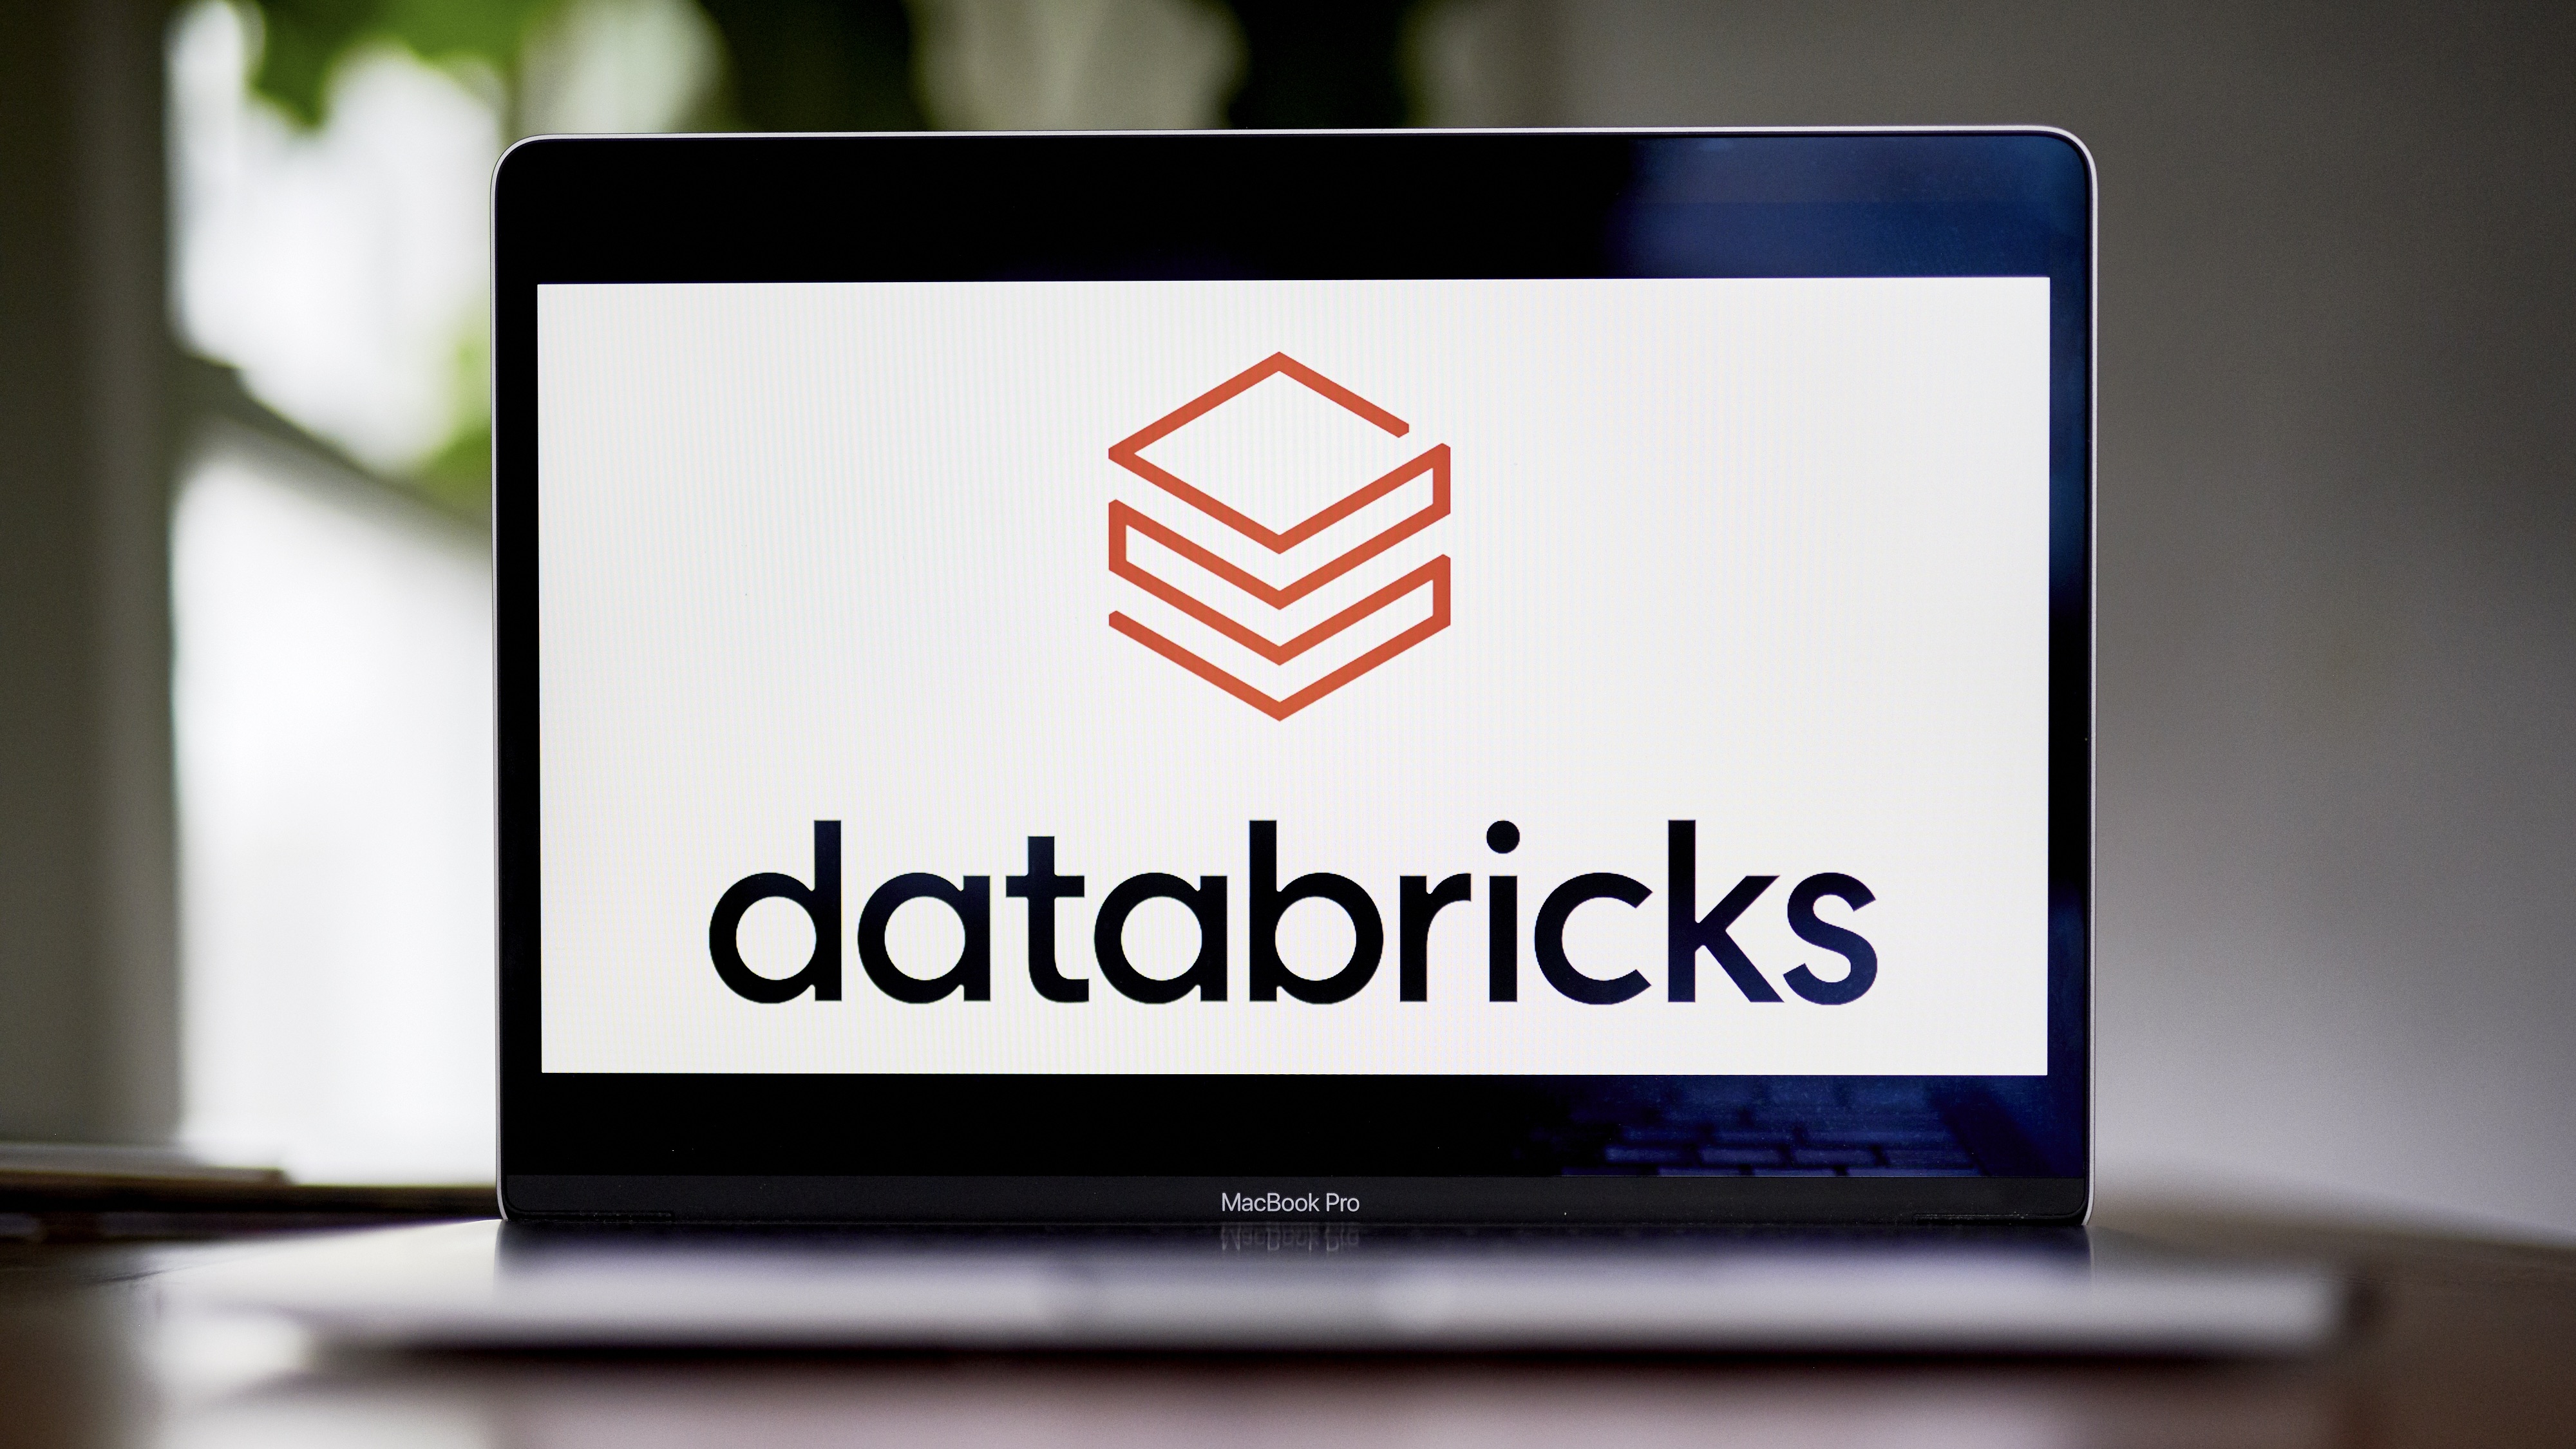 The Databricks logo on a Macbook Pro